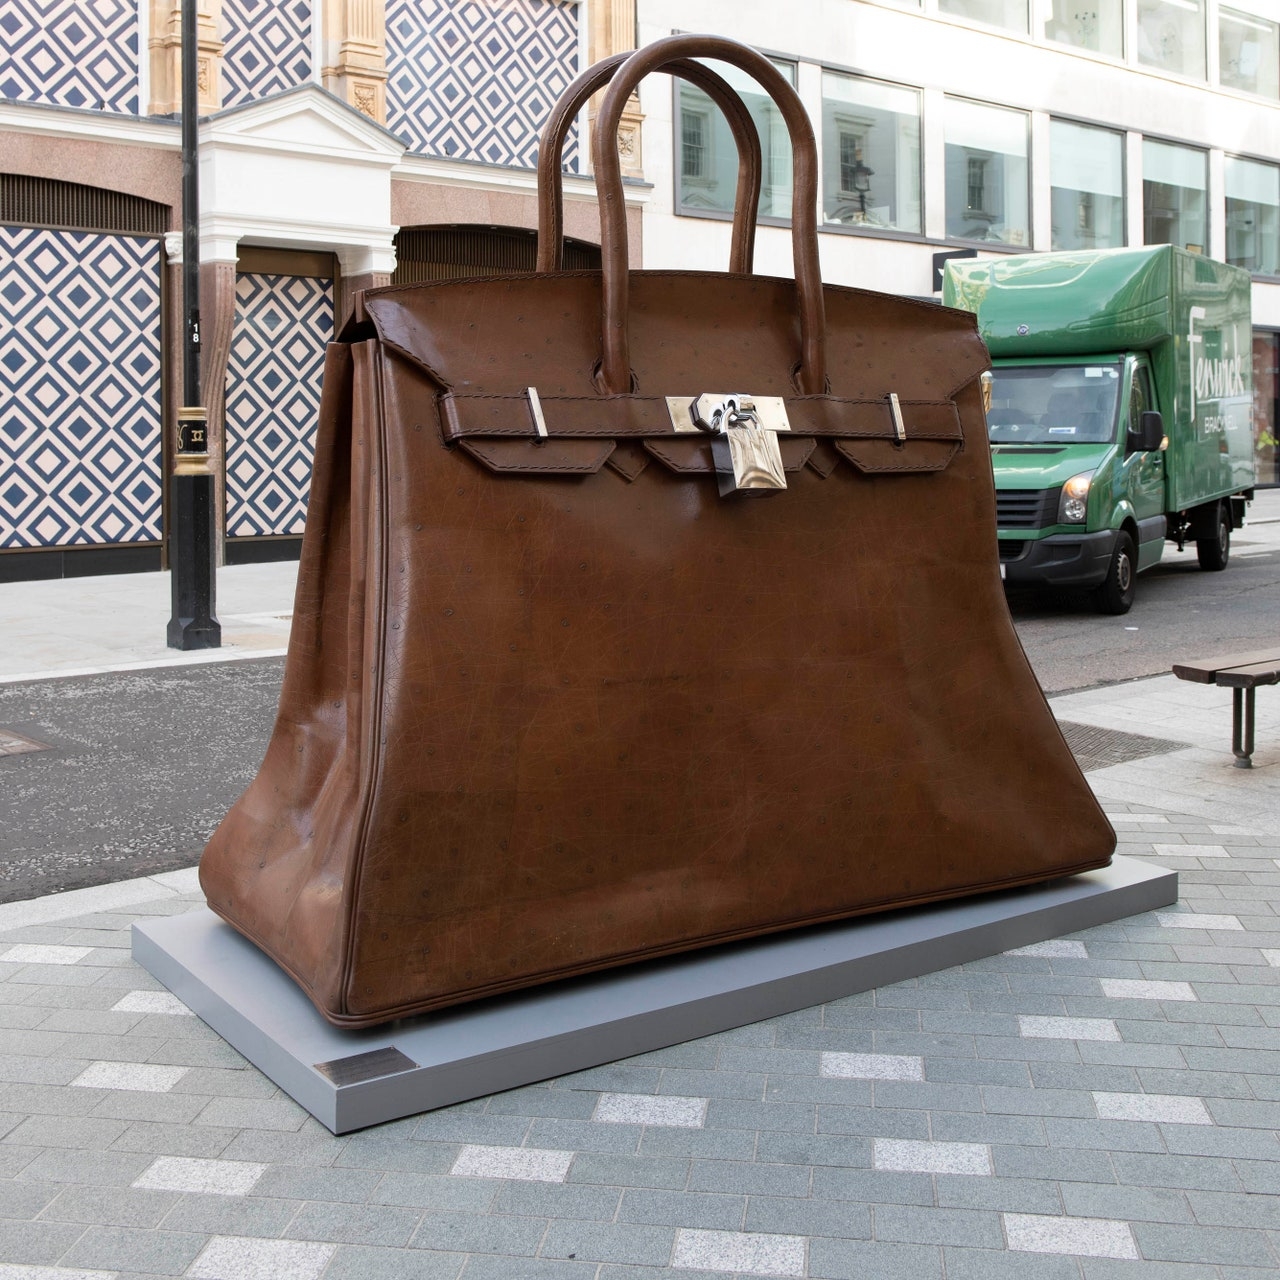 В Лондоне появилась гигантская скульптура сумки Hermès Birkin (ФОТО) - фото №1